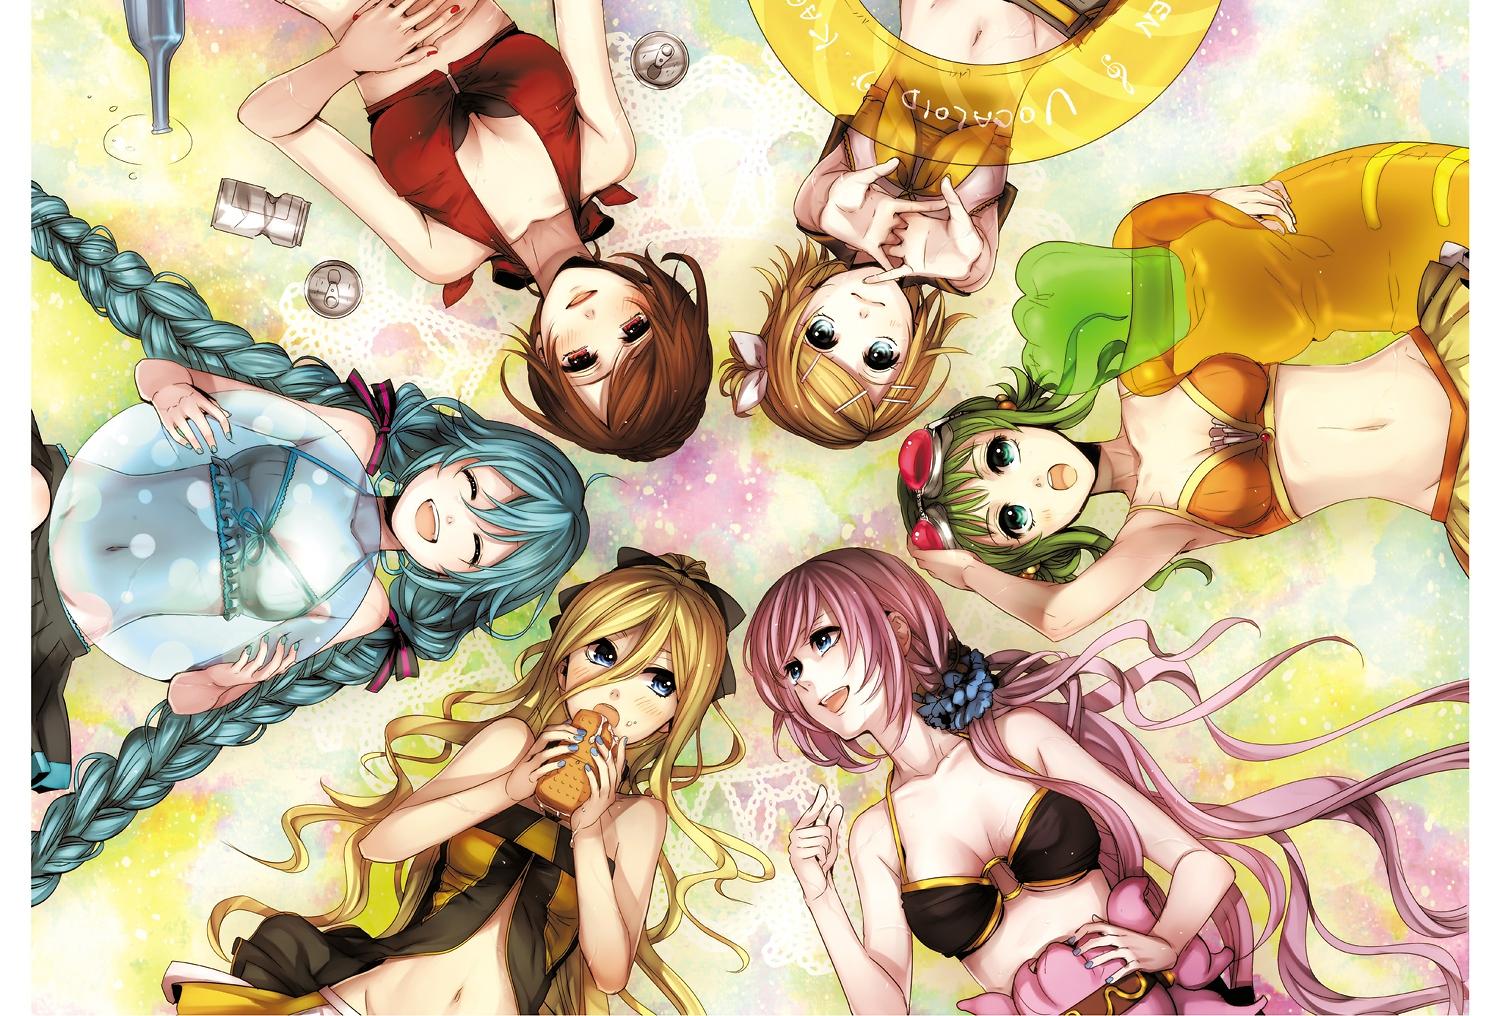 Descarga gratis la imagen Vocaloid, Luka Megurine, Animado, Hatsune Miku, Rin Kagamine, Gumi (Vocaloid), Meiko (Vocaloid), Lirio (Vocaloid) en el escritorio de tu PC